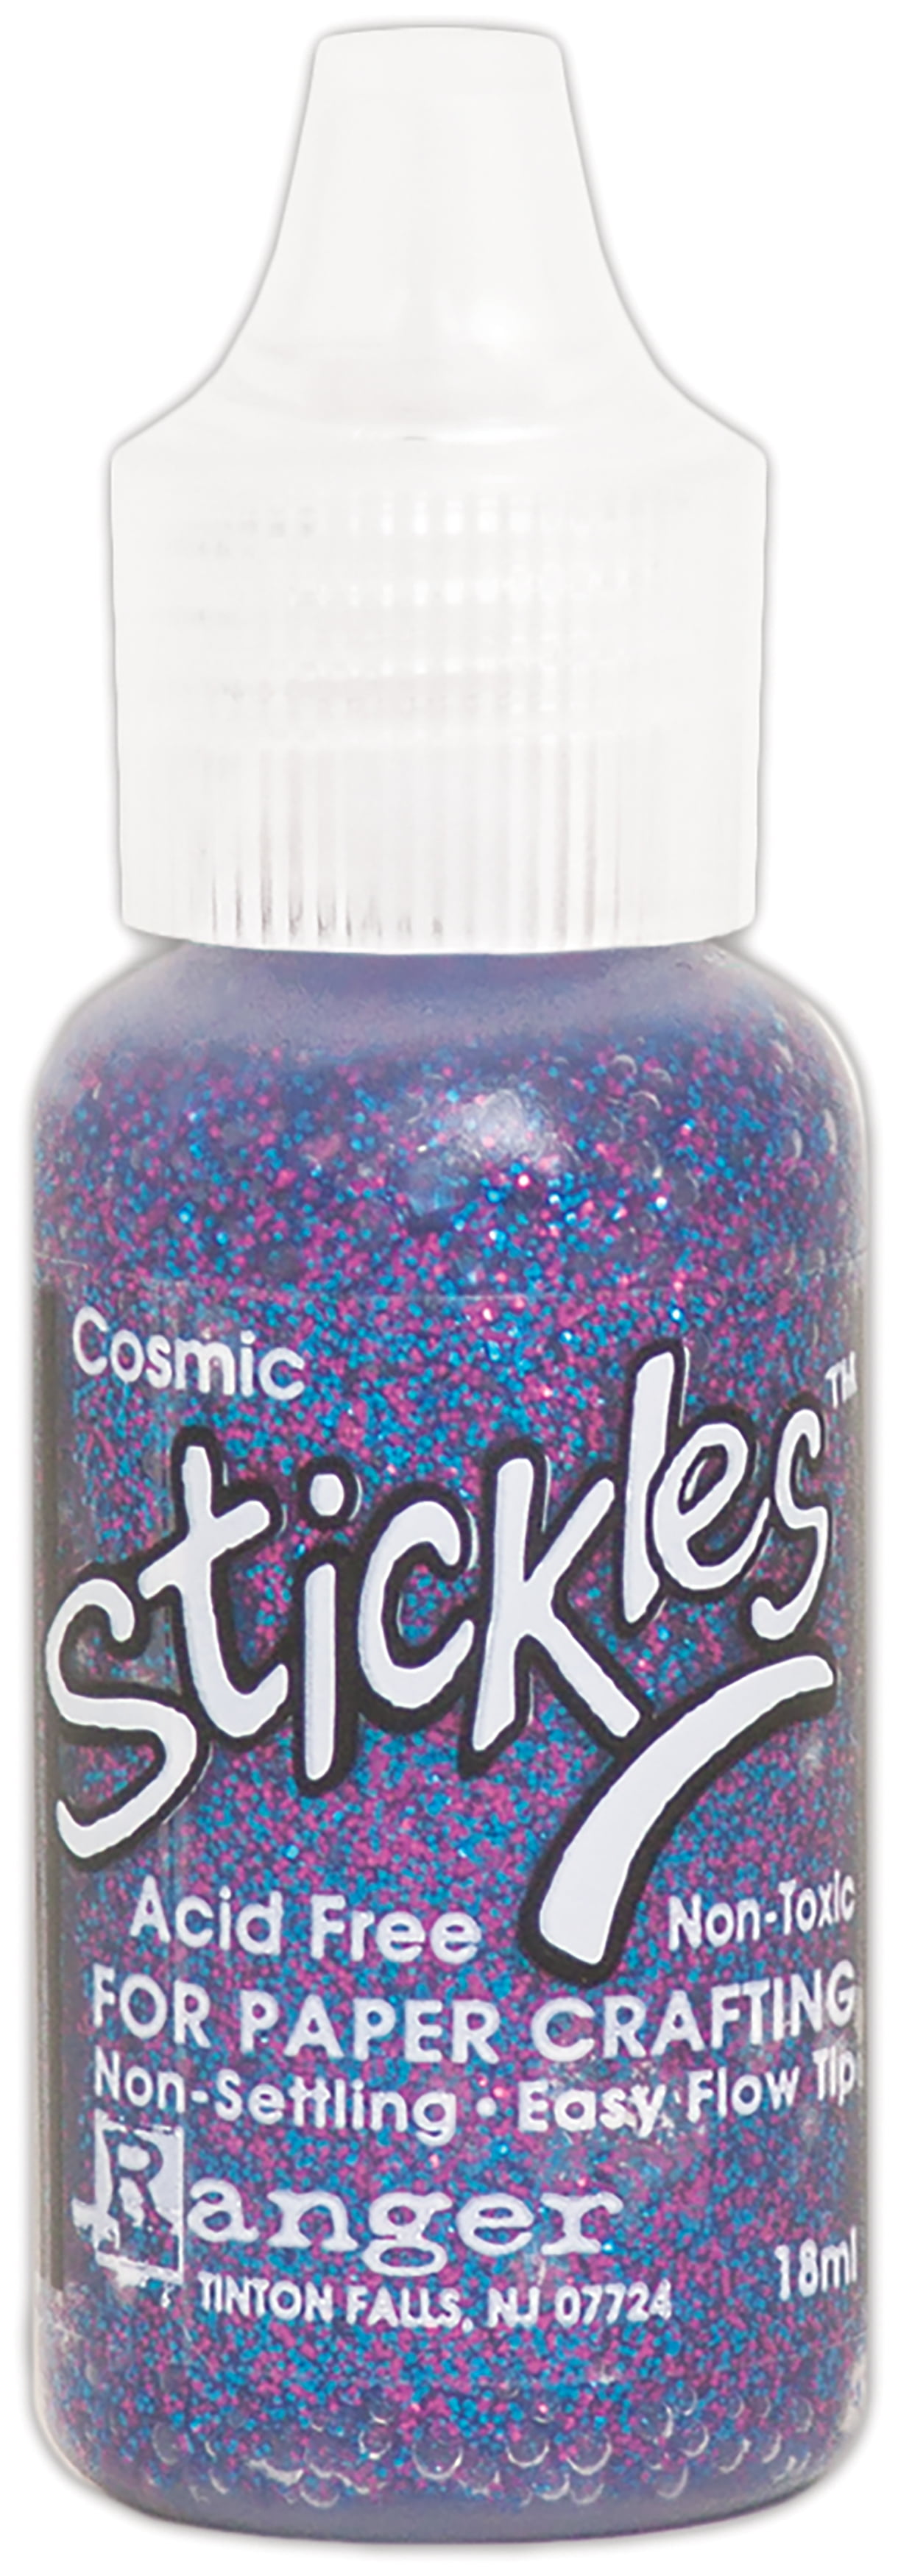 Ranger Ink Stickles Stardust Glitter Glue .5 fl. oz. / 18 ml